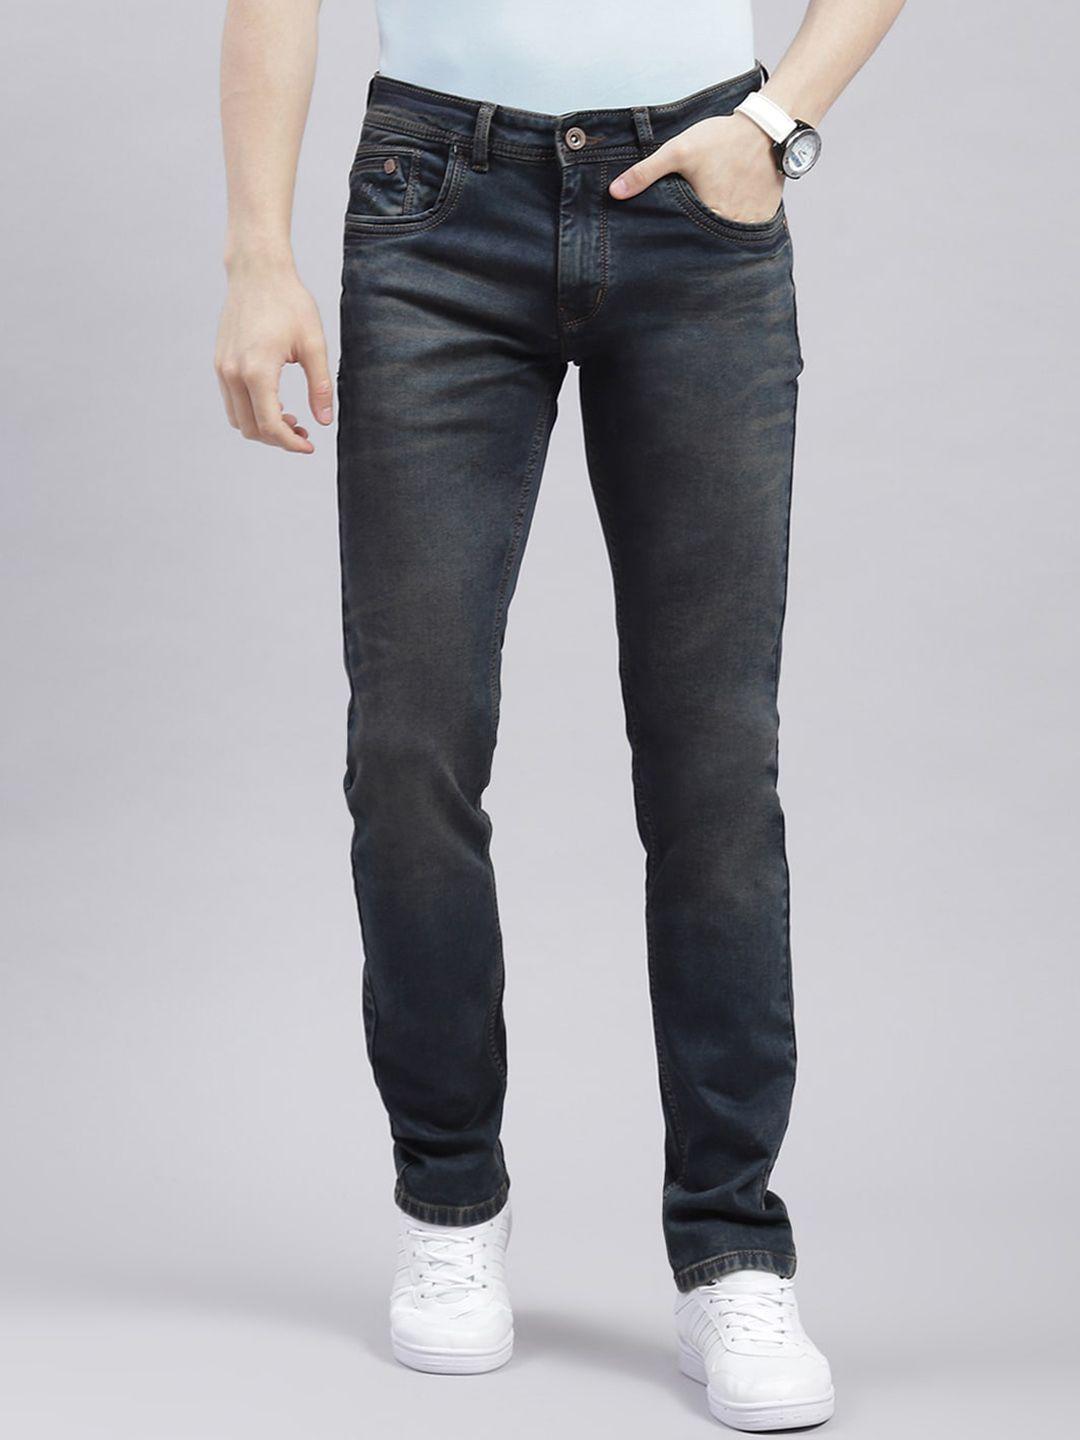 monte-carlo-men-narrow-clean-look-light-fade-jeans